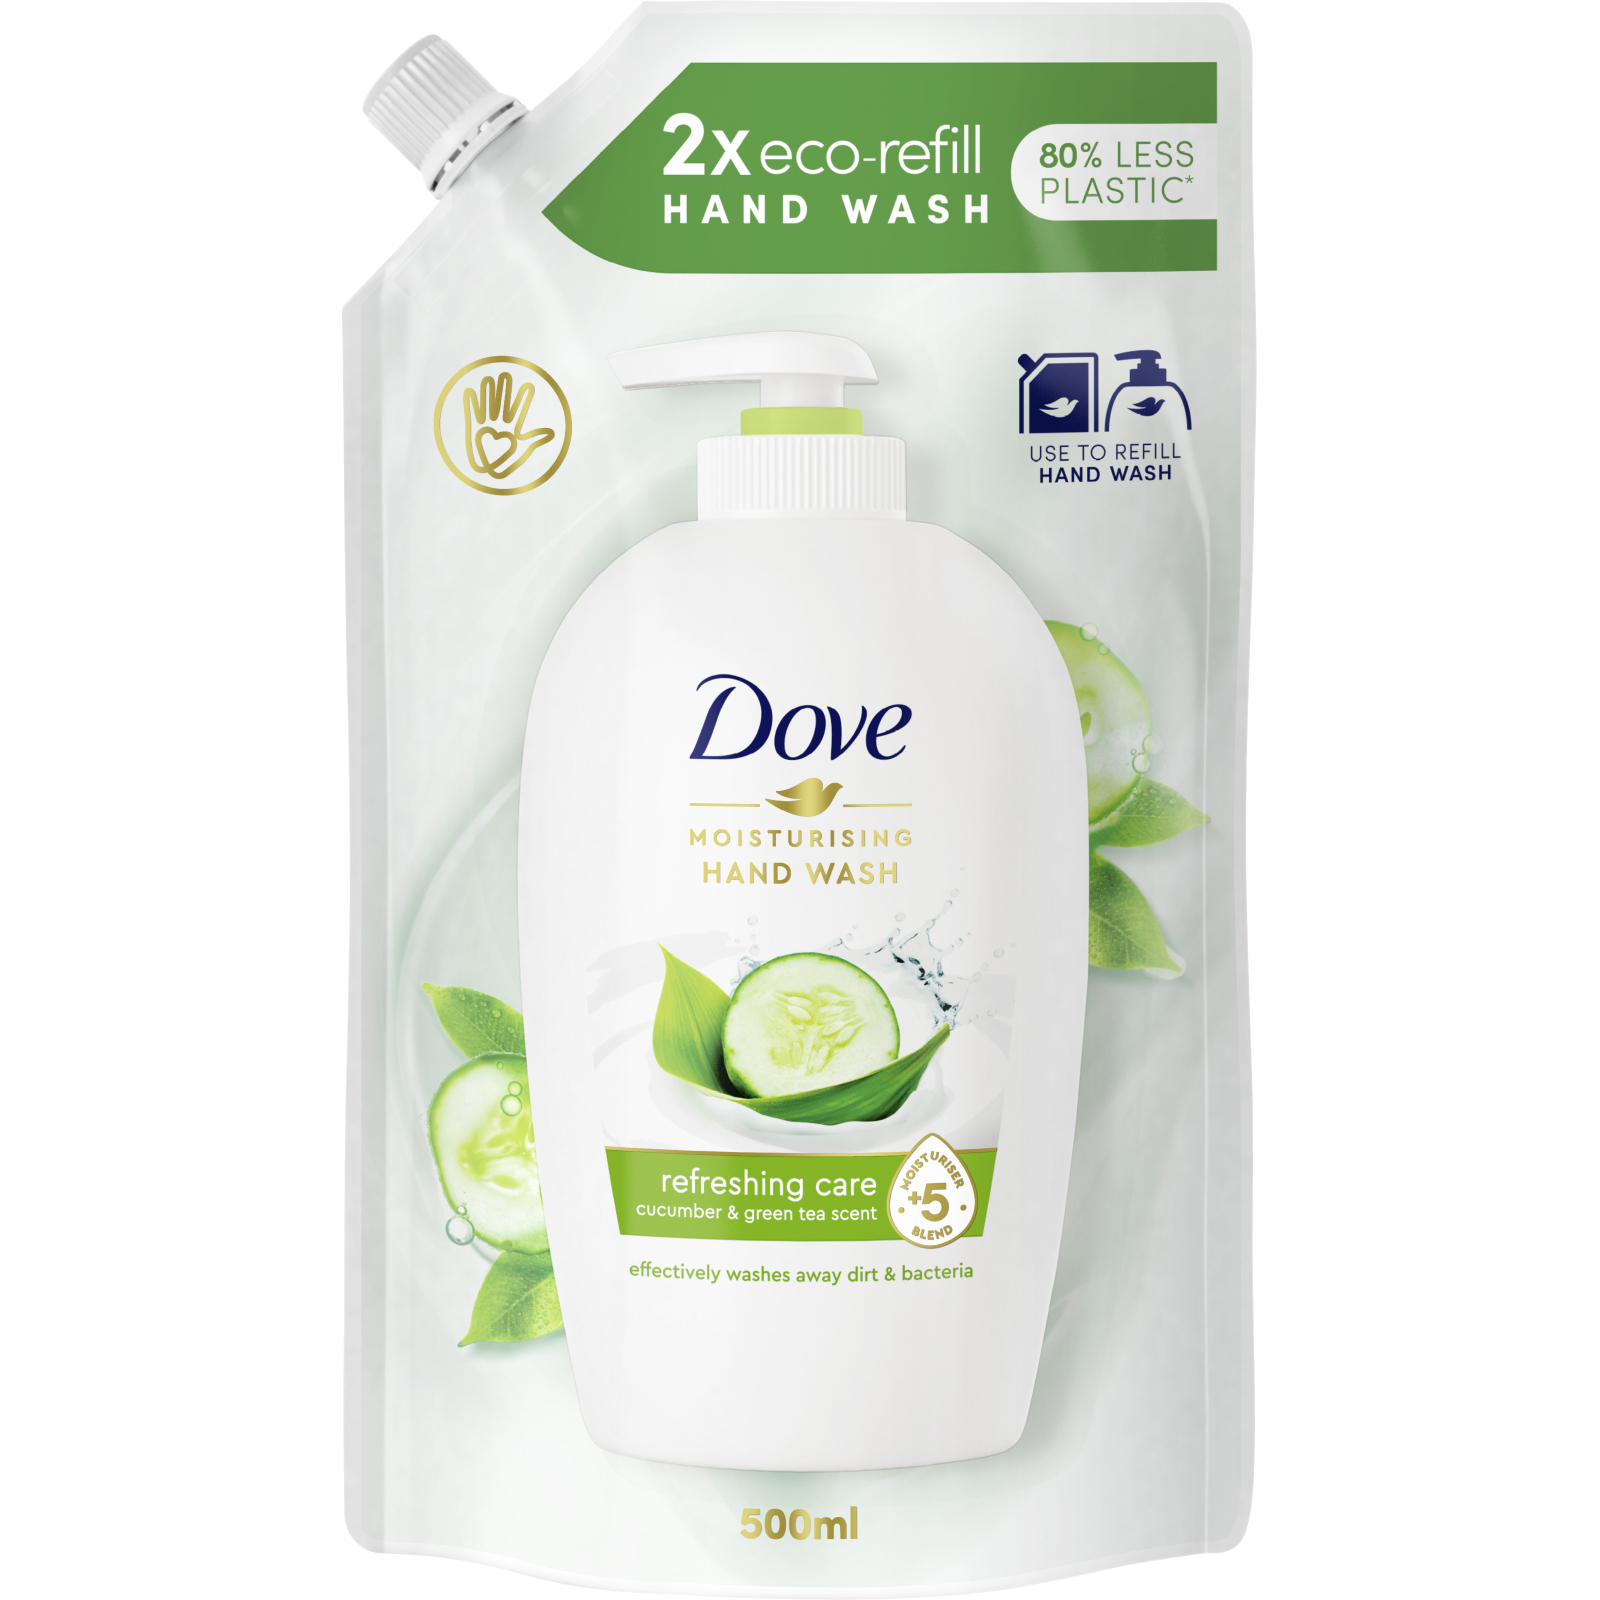 Жидкое мыло Dove Прикосновение свежести 250 мл (8717163023839)